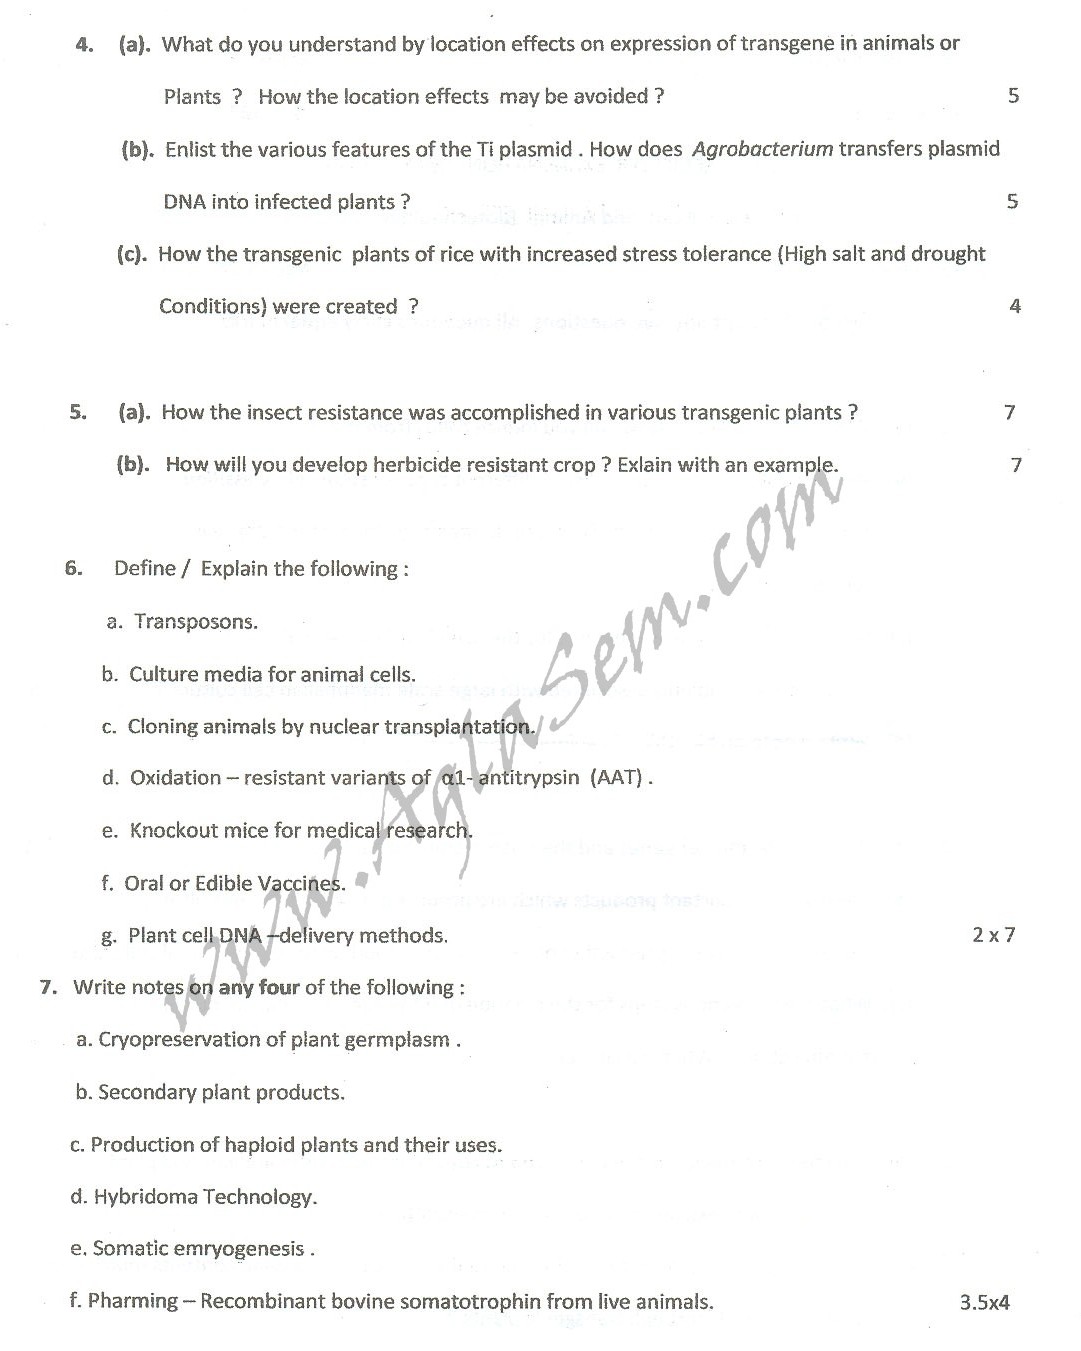 DTU Question Papers 2010  6 Semester - End Sem - BT-313